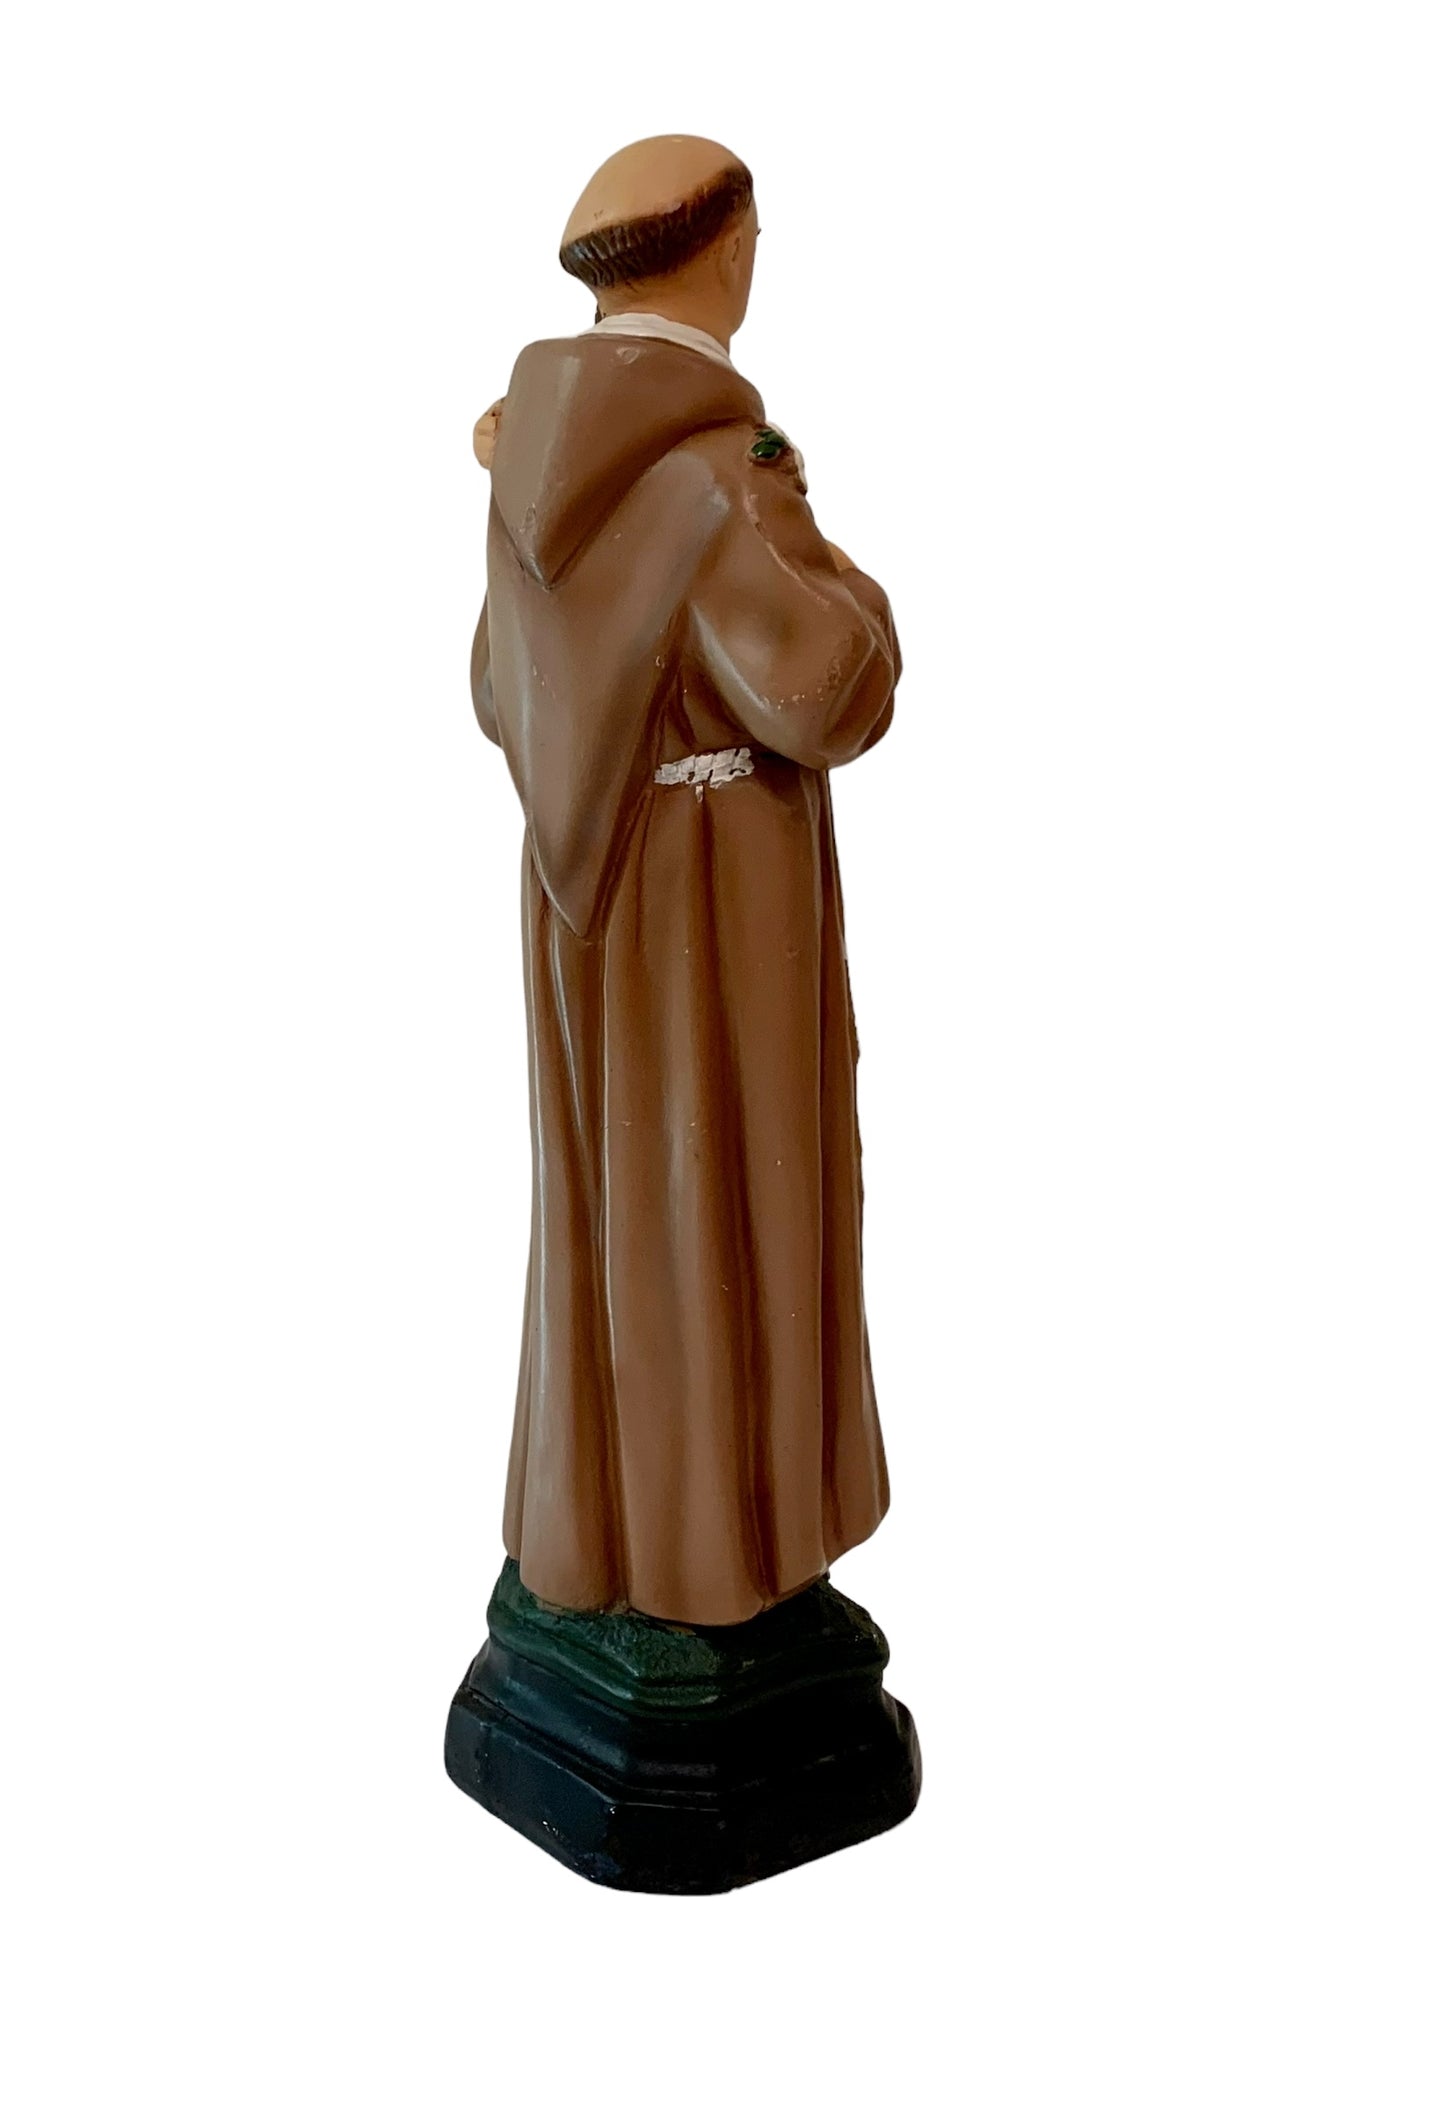 Vintage Religious Decor Saint Anthony of Padua Chalkware Religious Statue